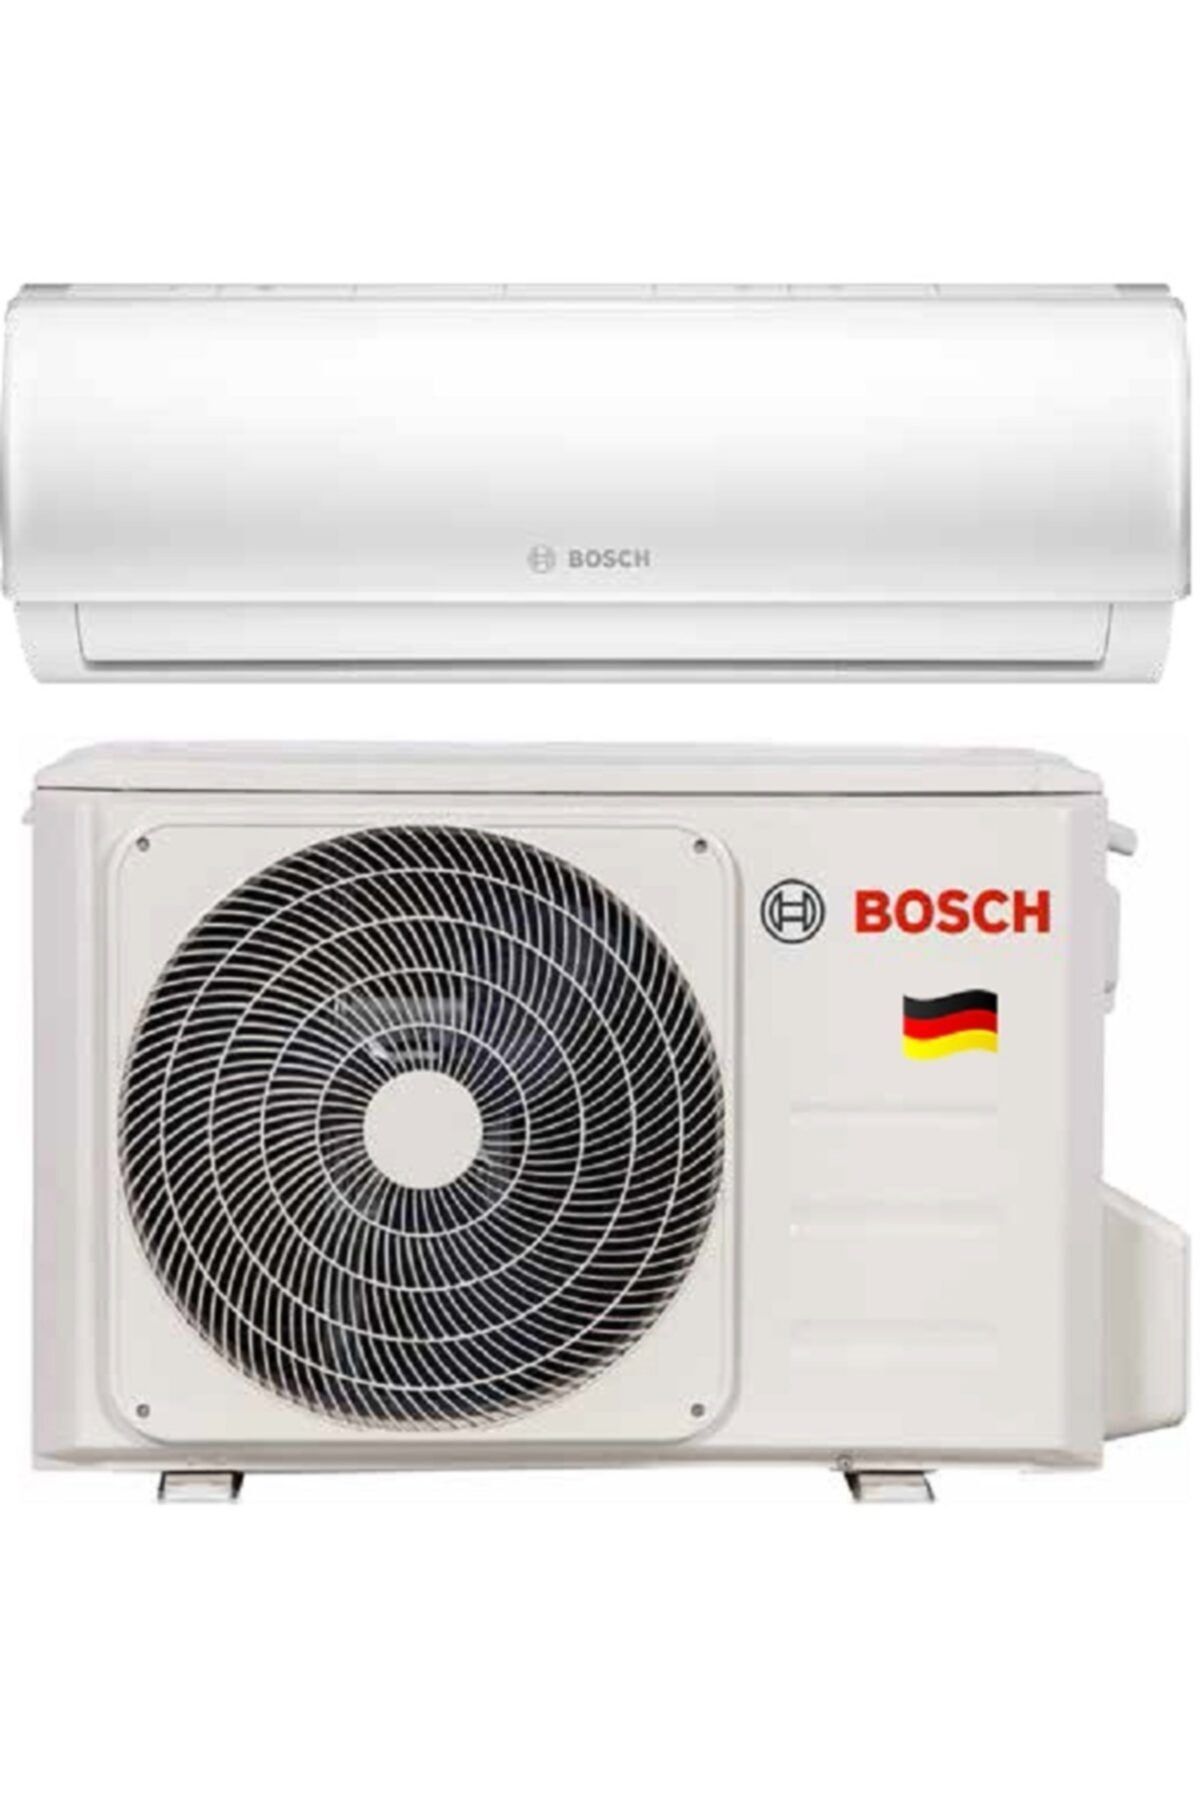 Bosch Climate 5000 Rac 3,5-2 Ibw 12.000 Btu/h Inverter Klima